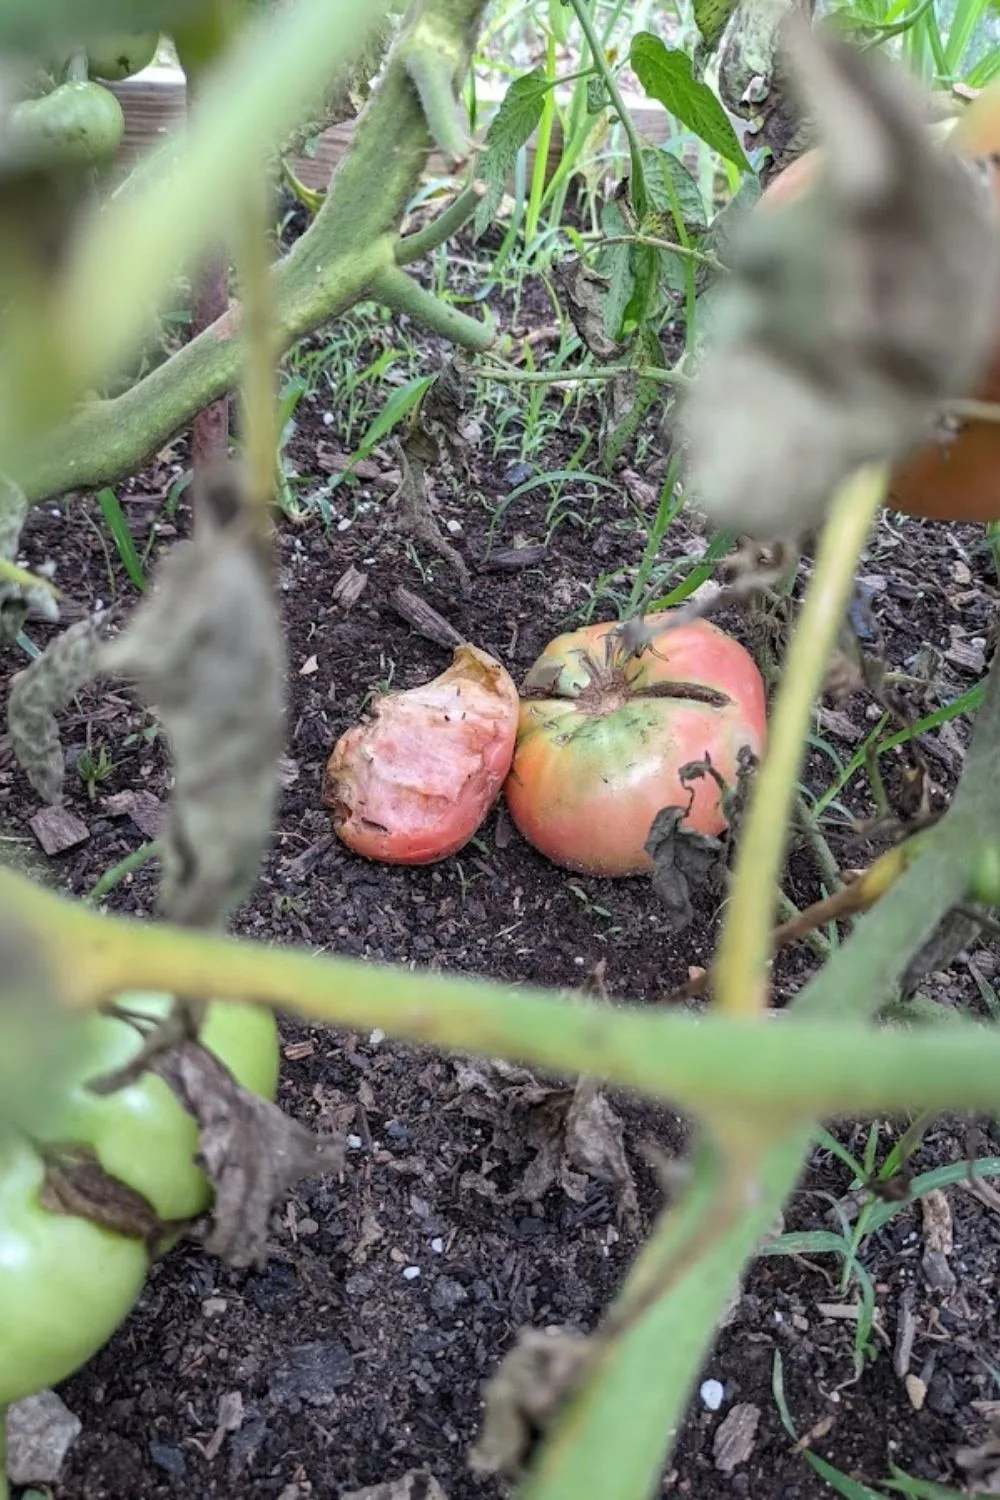 a ripe tomato half eaten by a groundhog